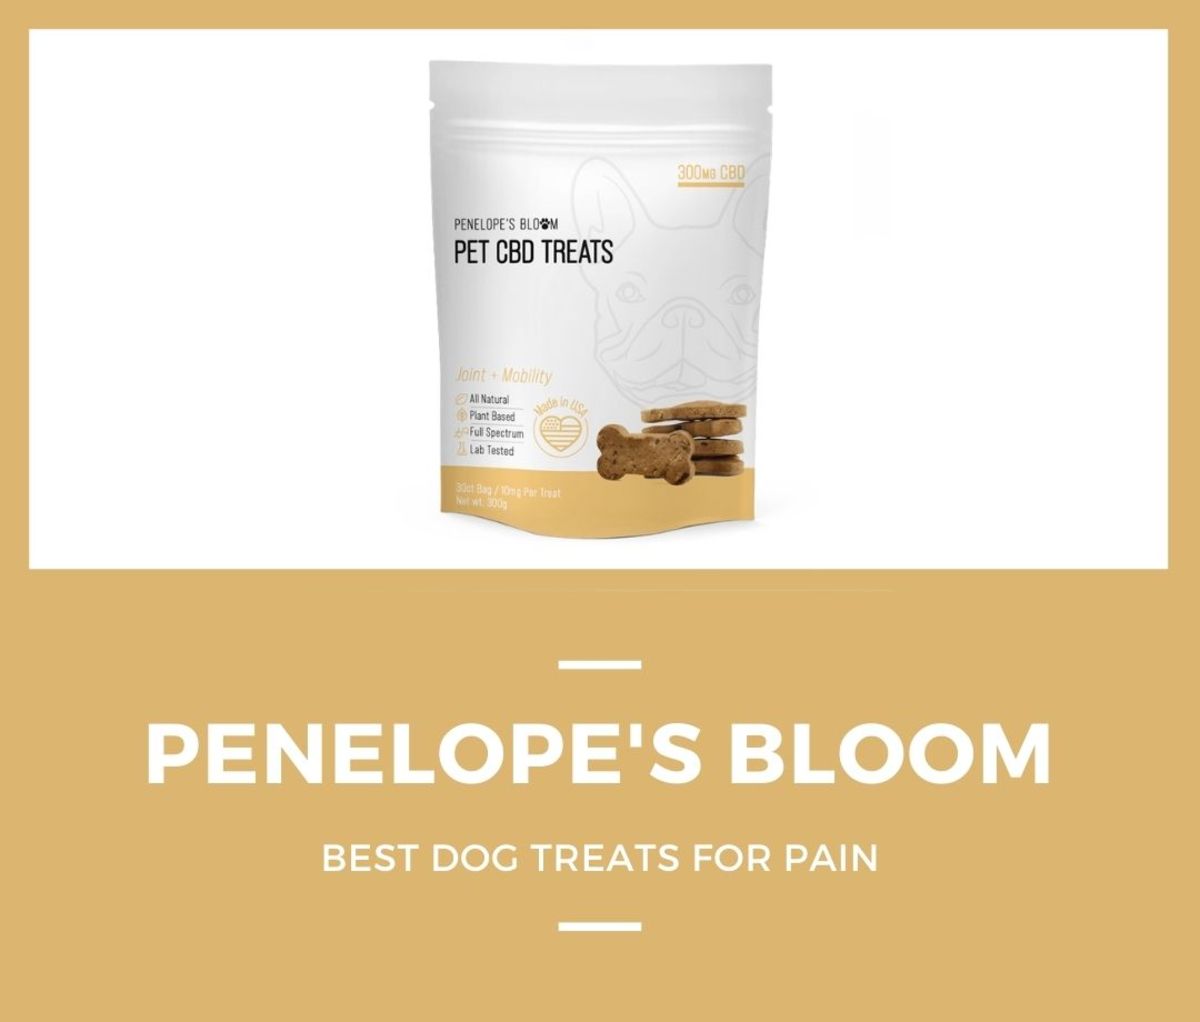 3. Penelope’s Bloom